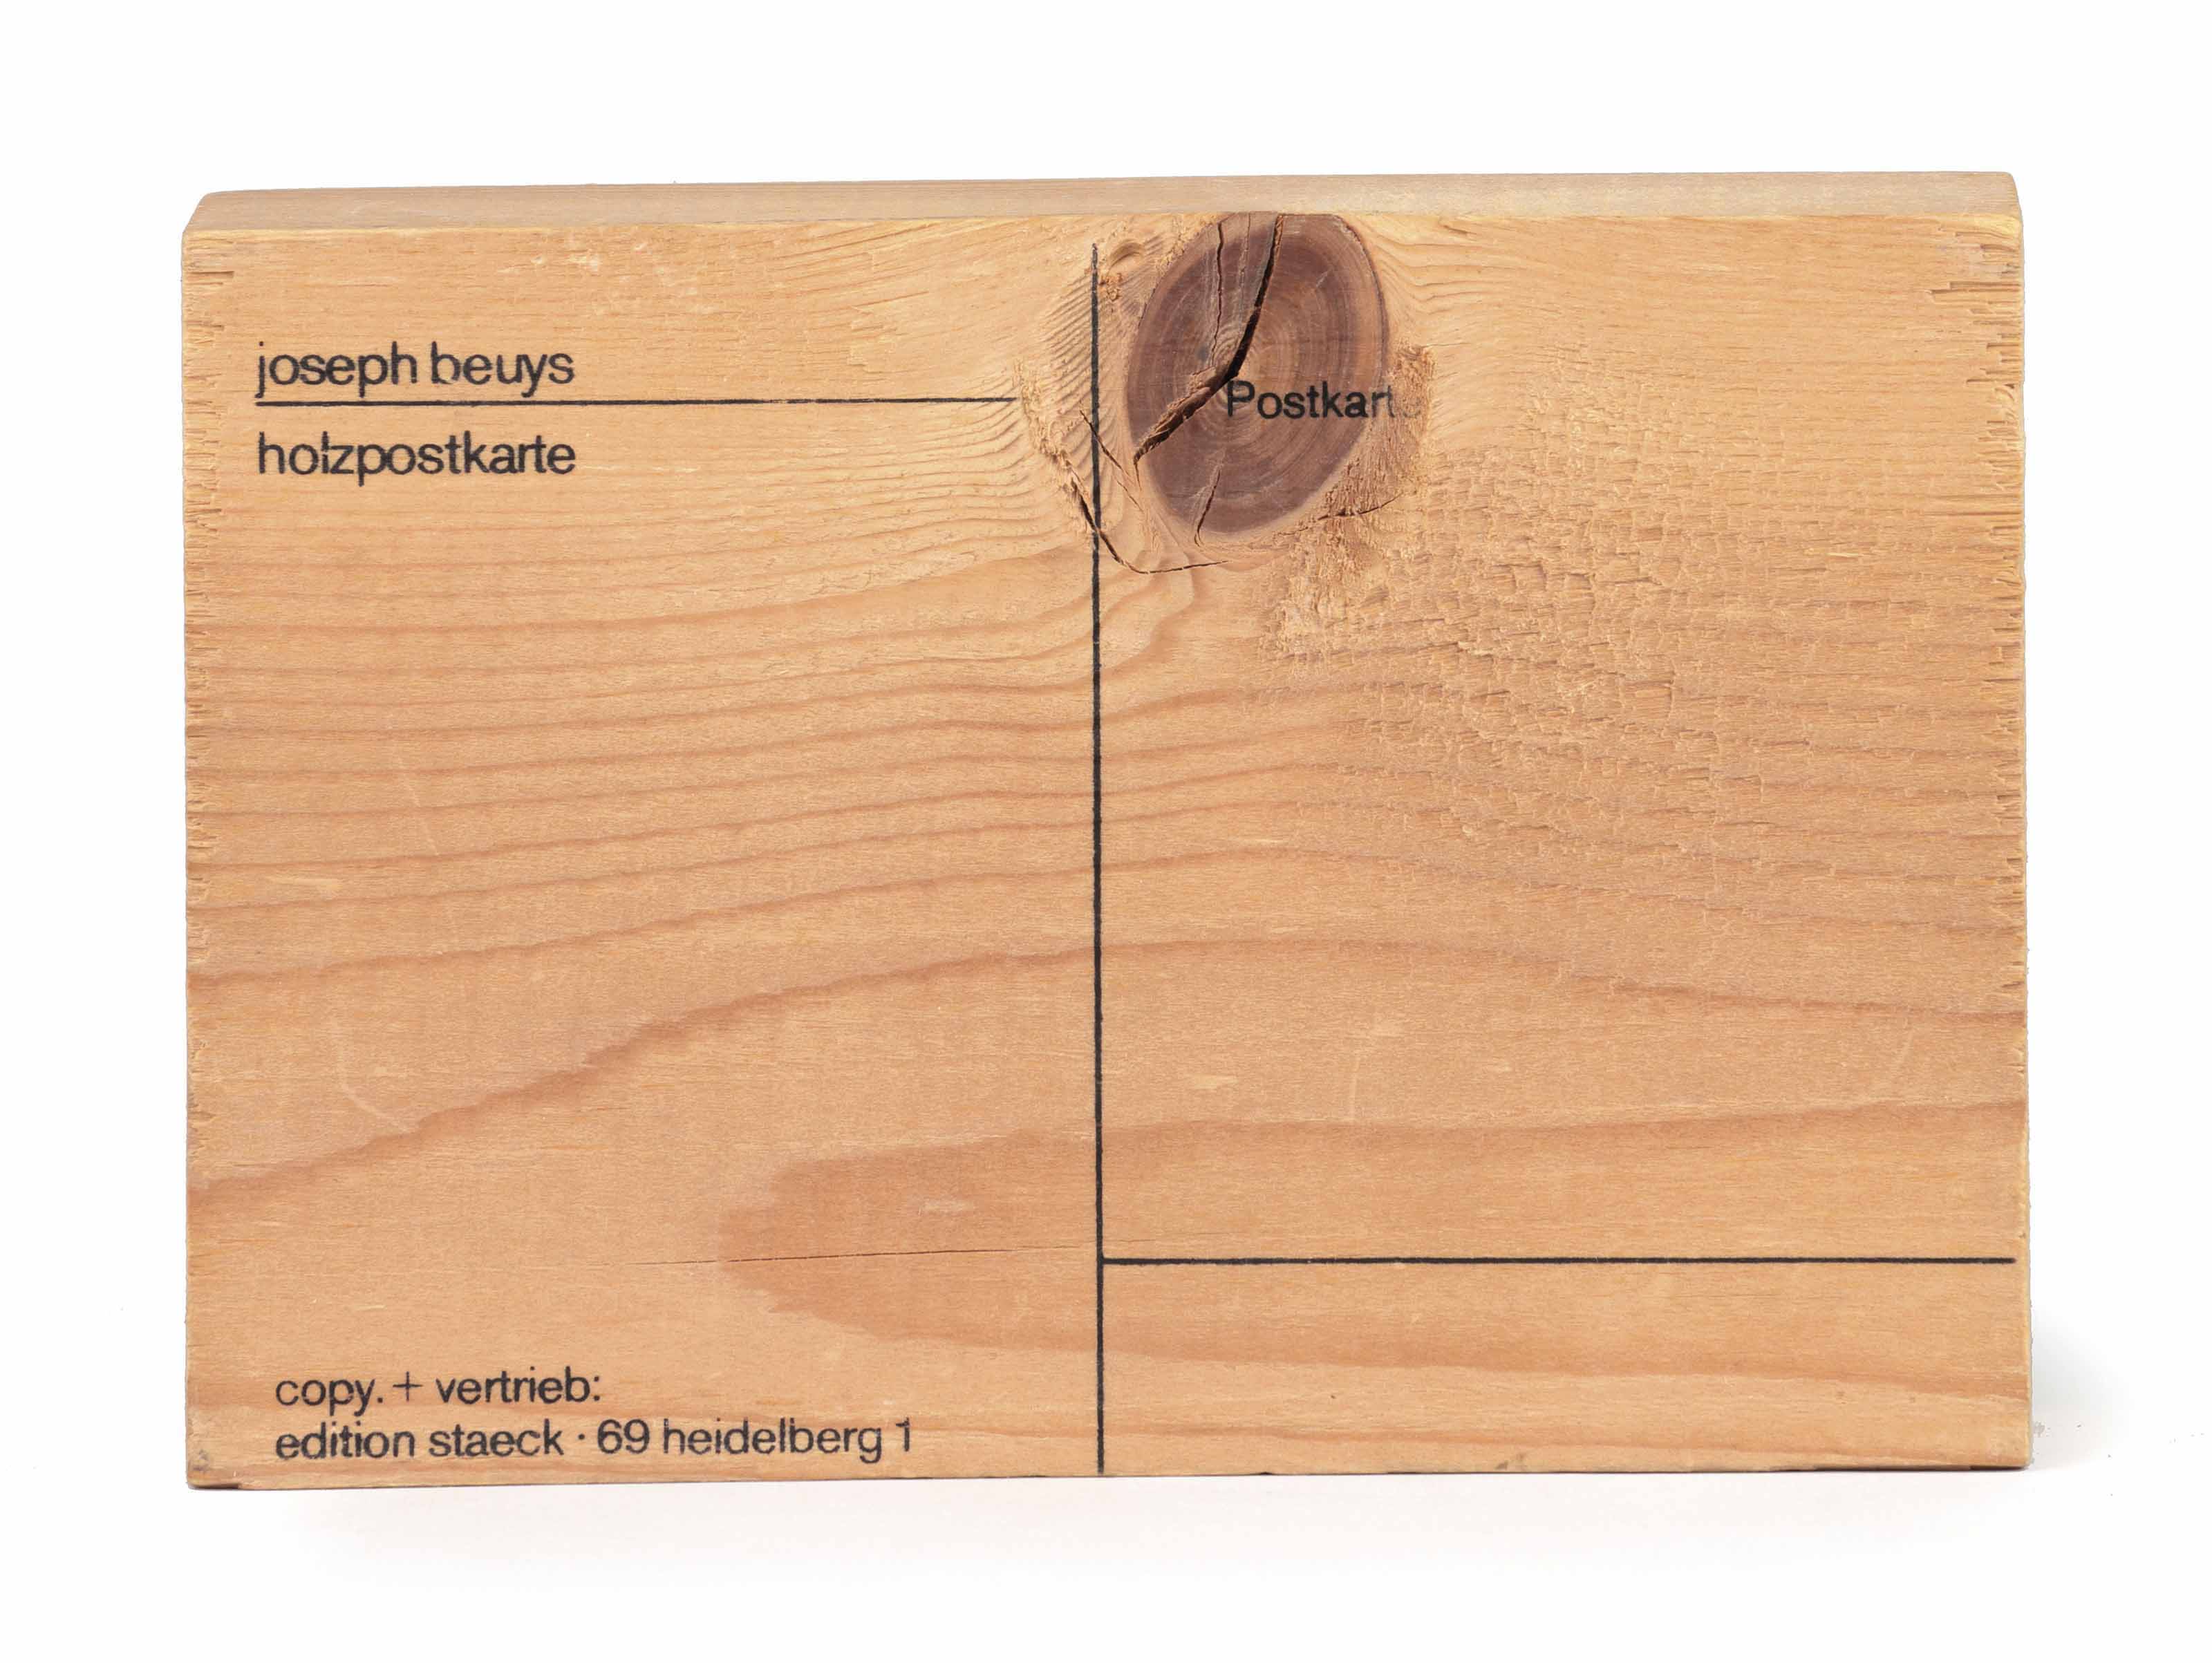 Holzpostkarte (Wood Postcard)